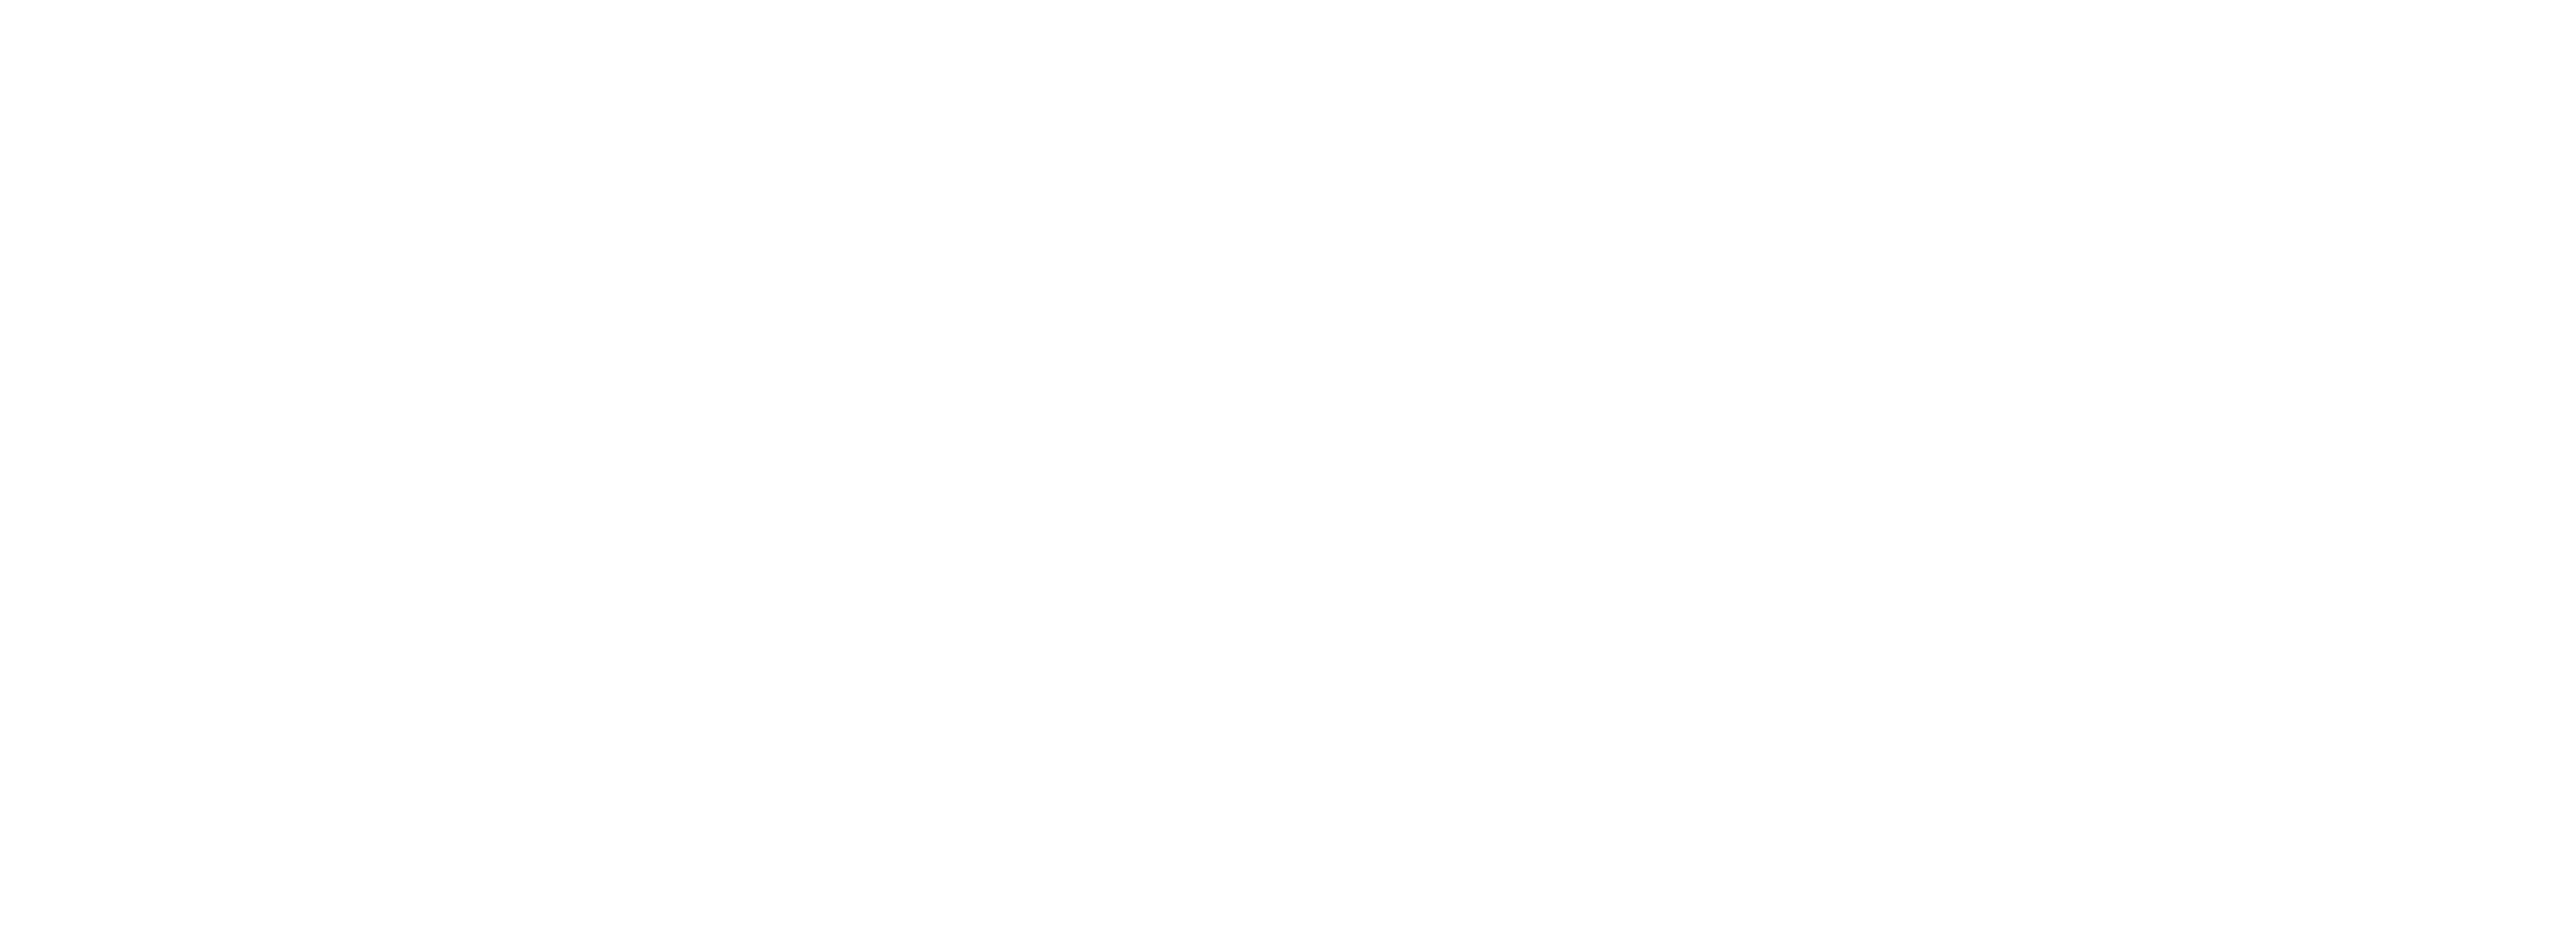 DAMGIRL Napa Valley